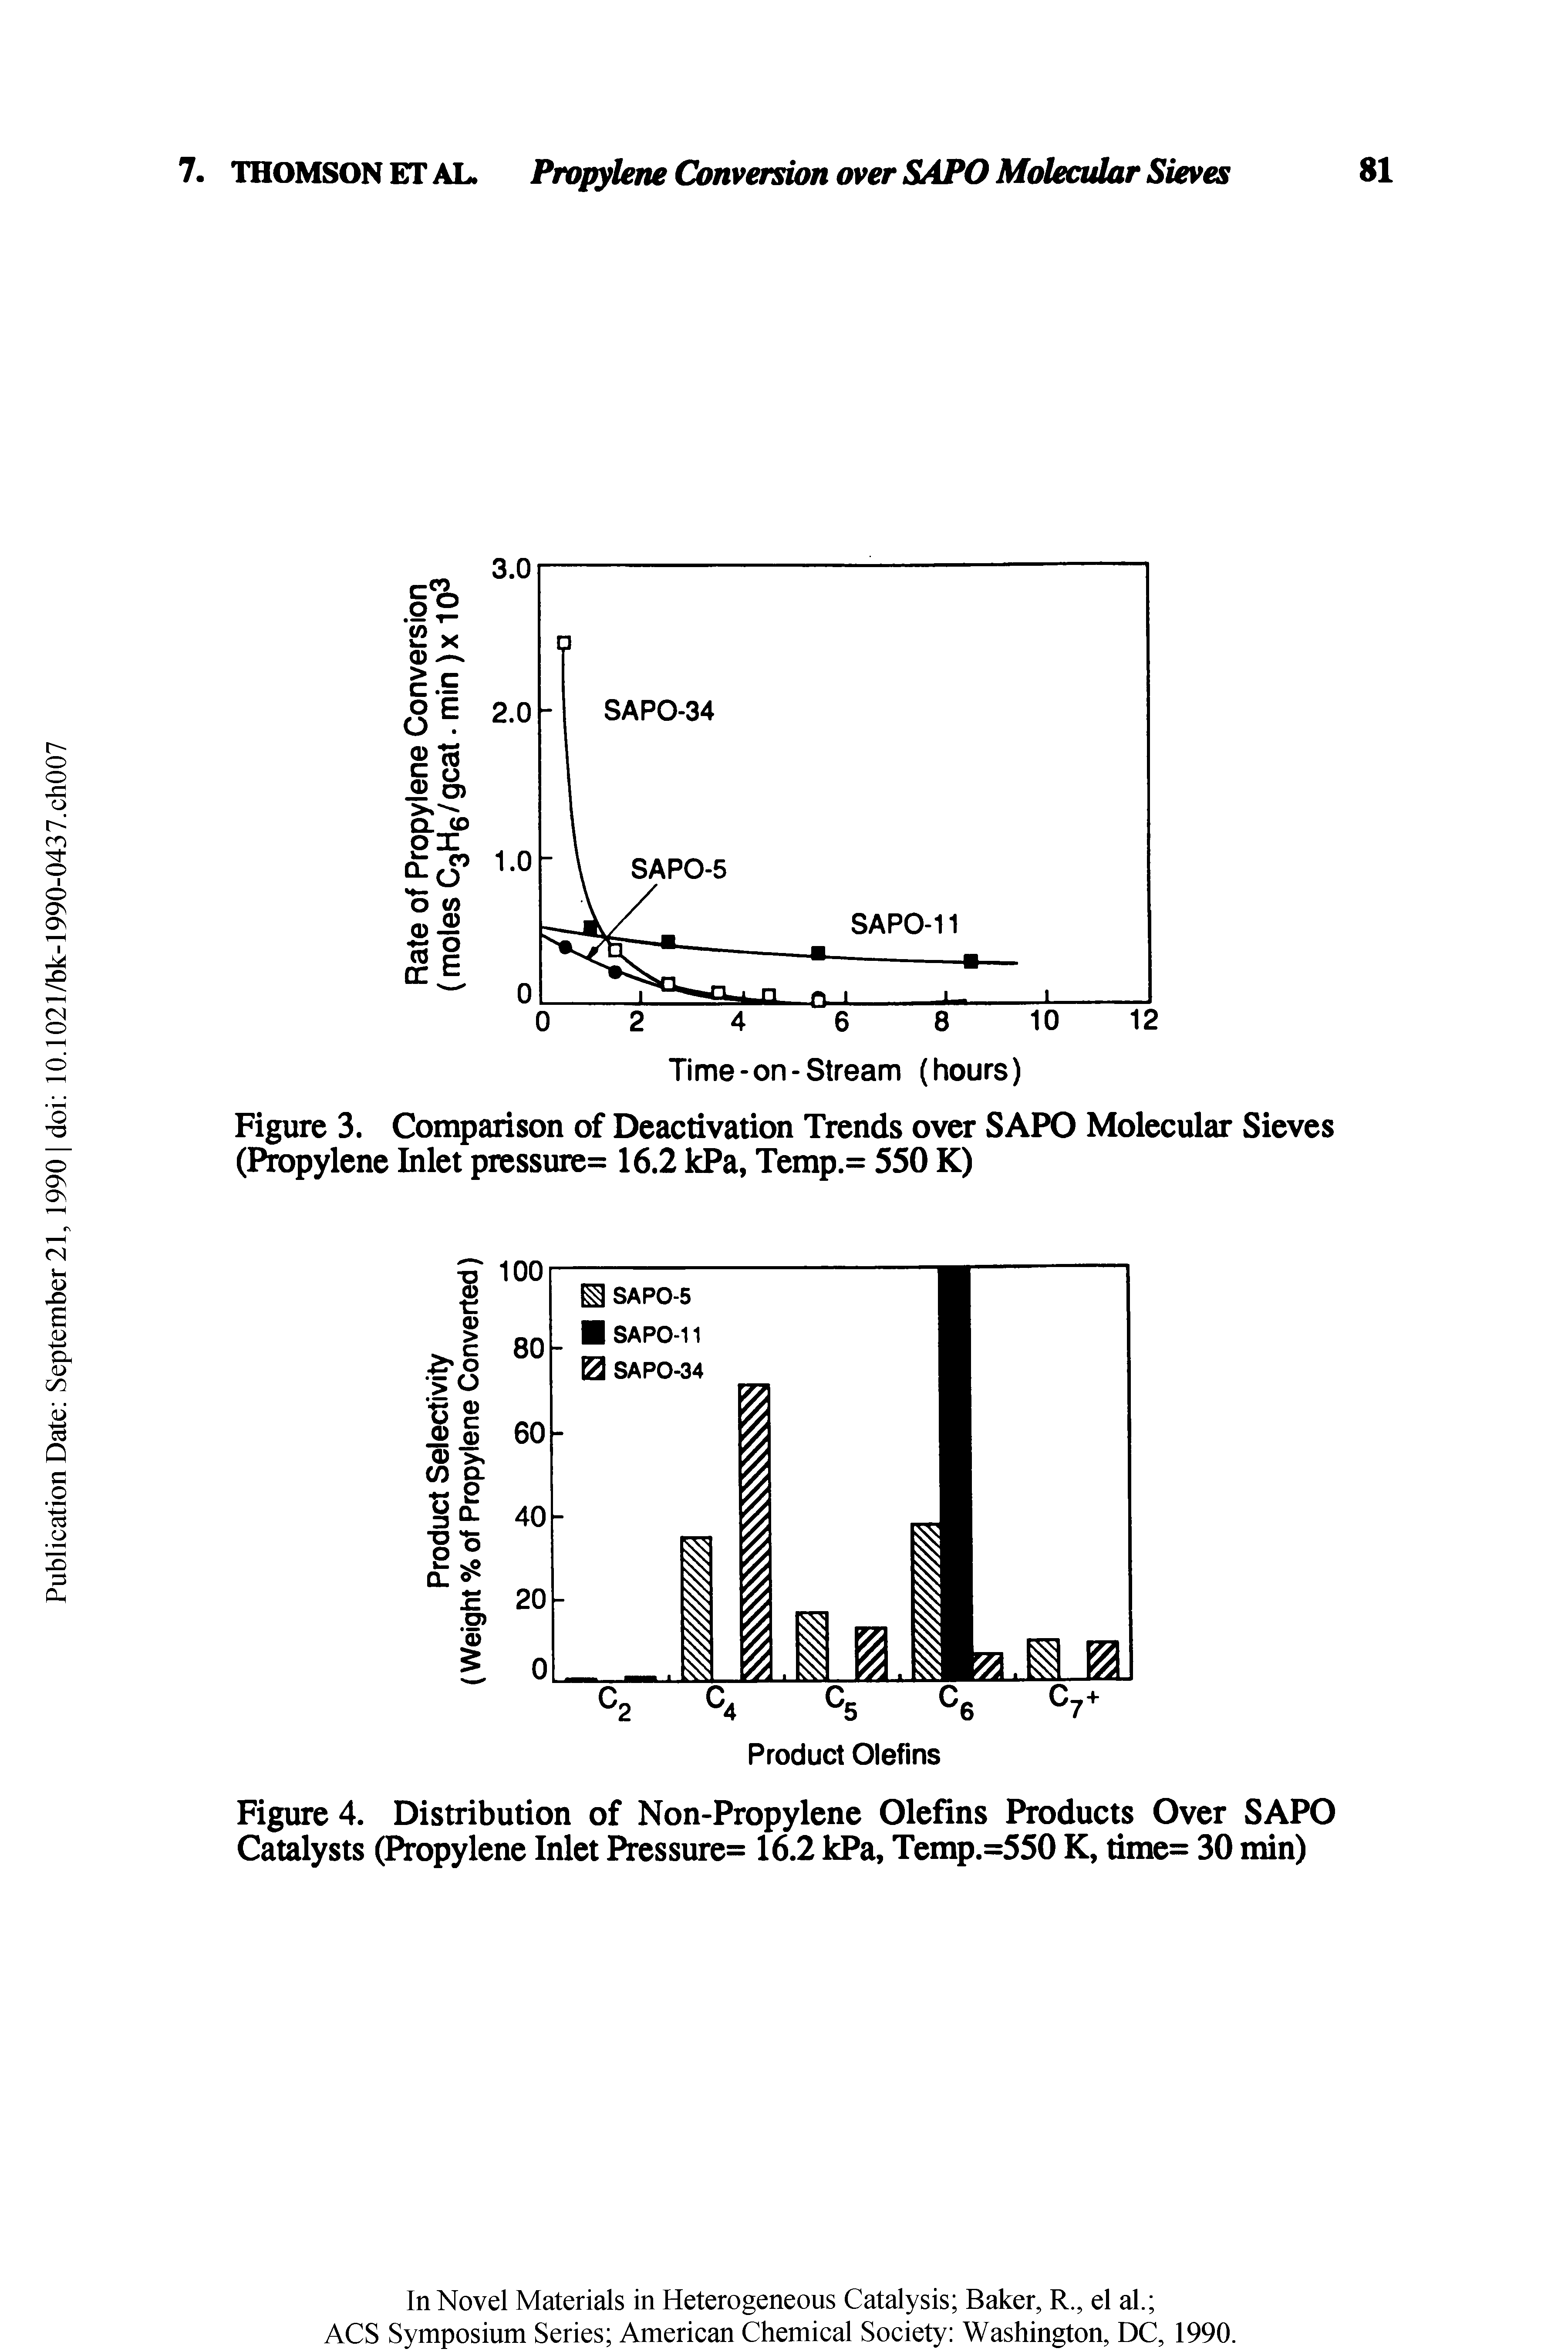 Figure 3. Comparison of Deactivation Trends over SAPO Molecular Sieves (Propylene Inlet pressure= 16.2 kPa, Temp.= 550 K)...